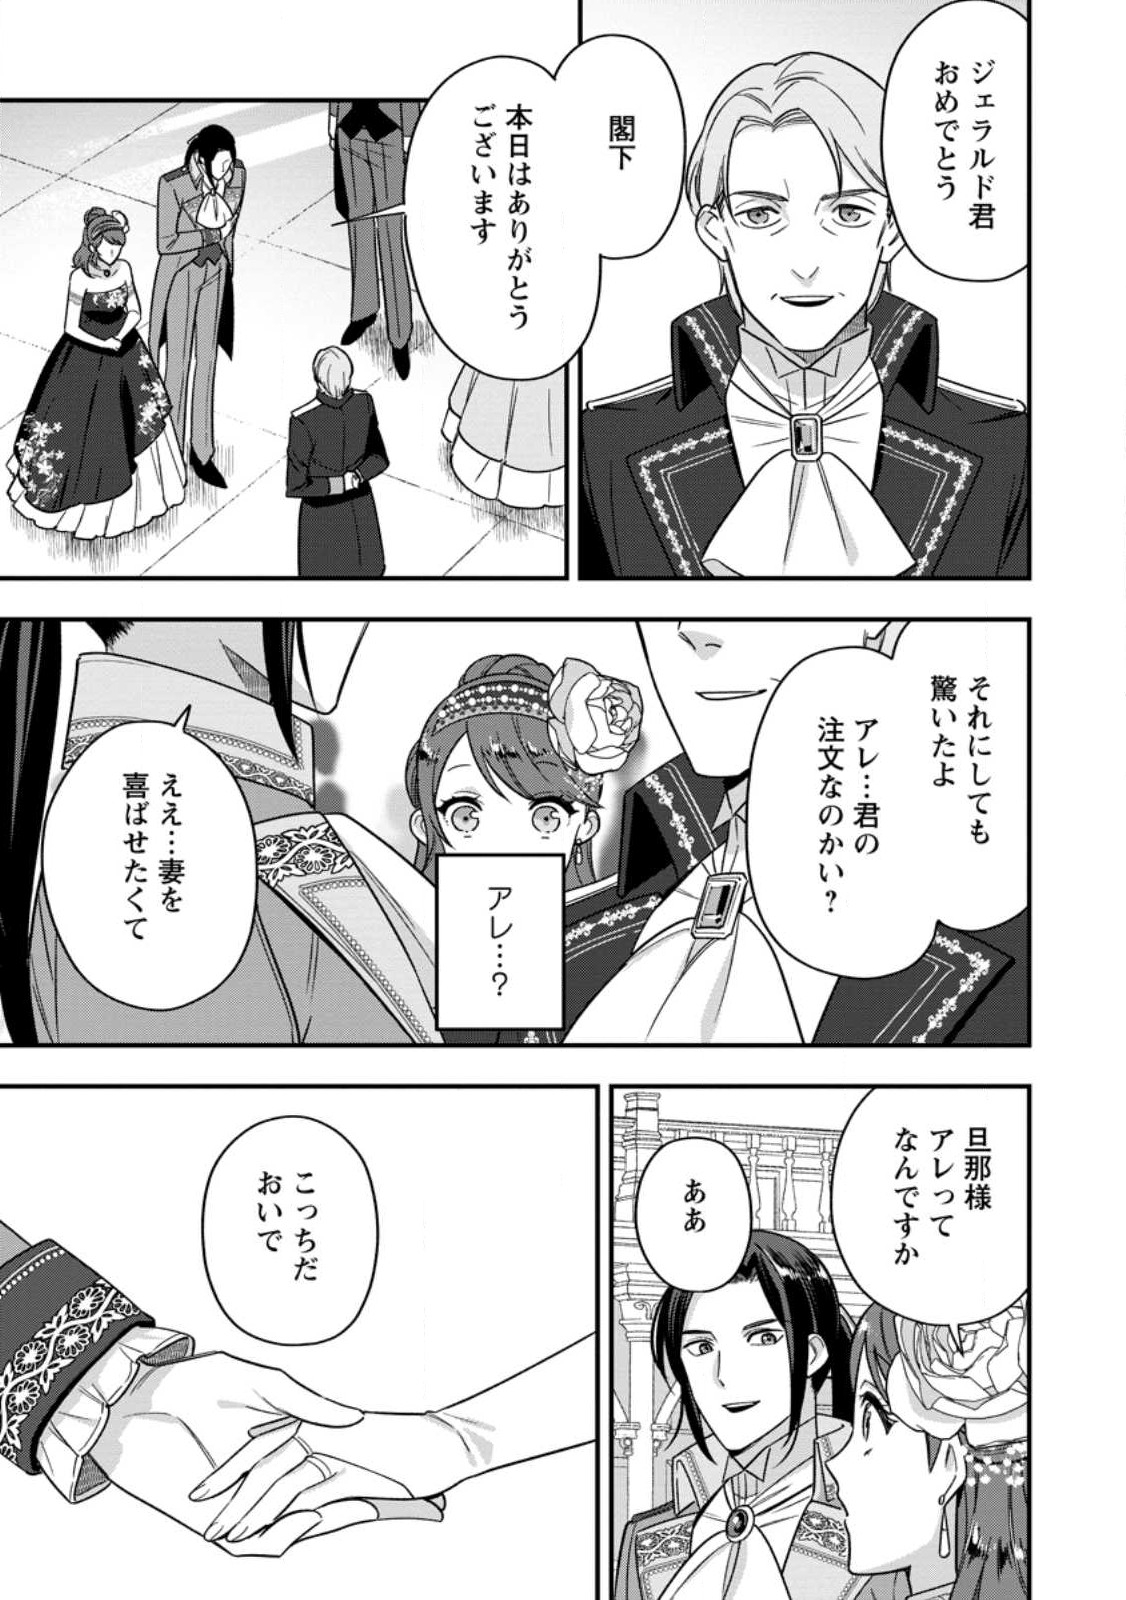 Aisanai to Iwaremashite mo - Chapter 10.3 - Page 5